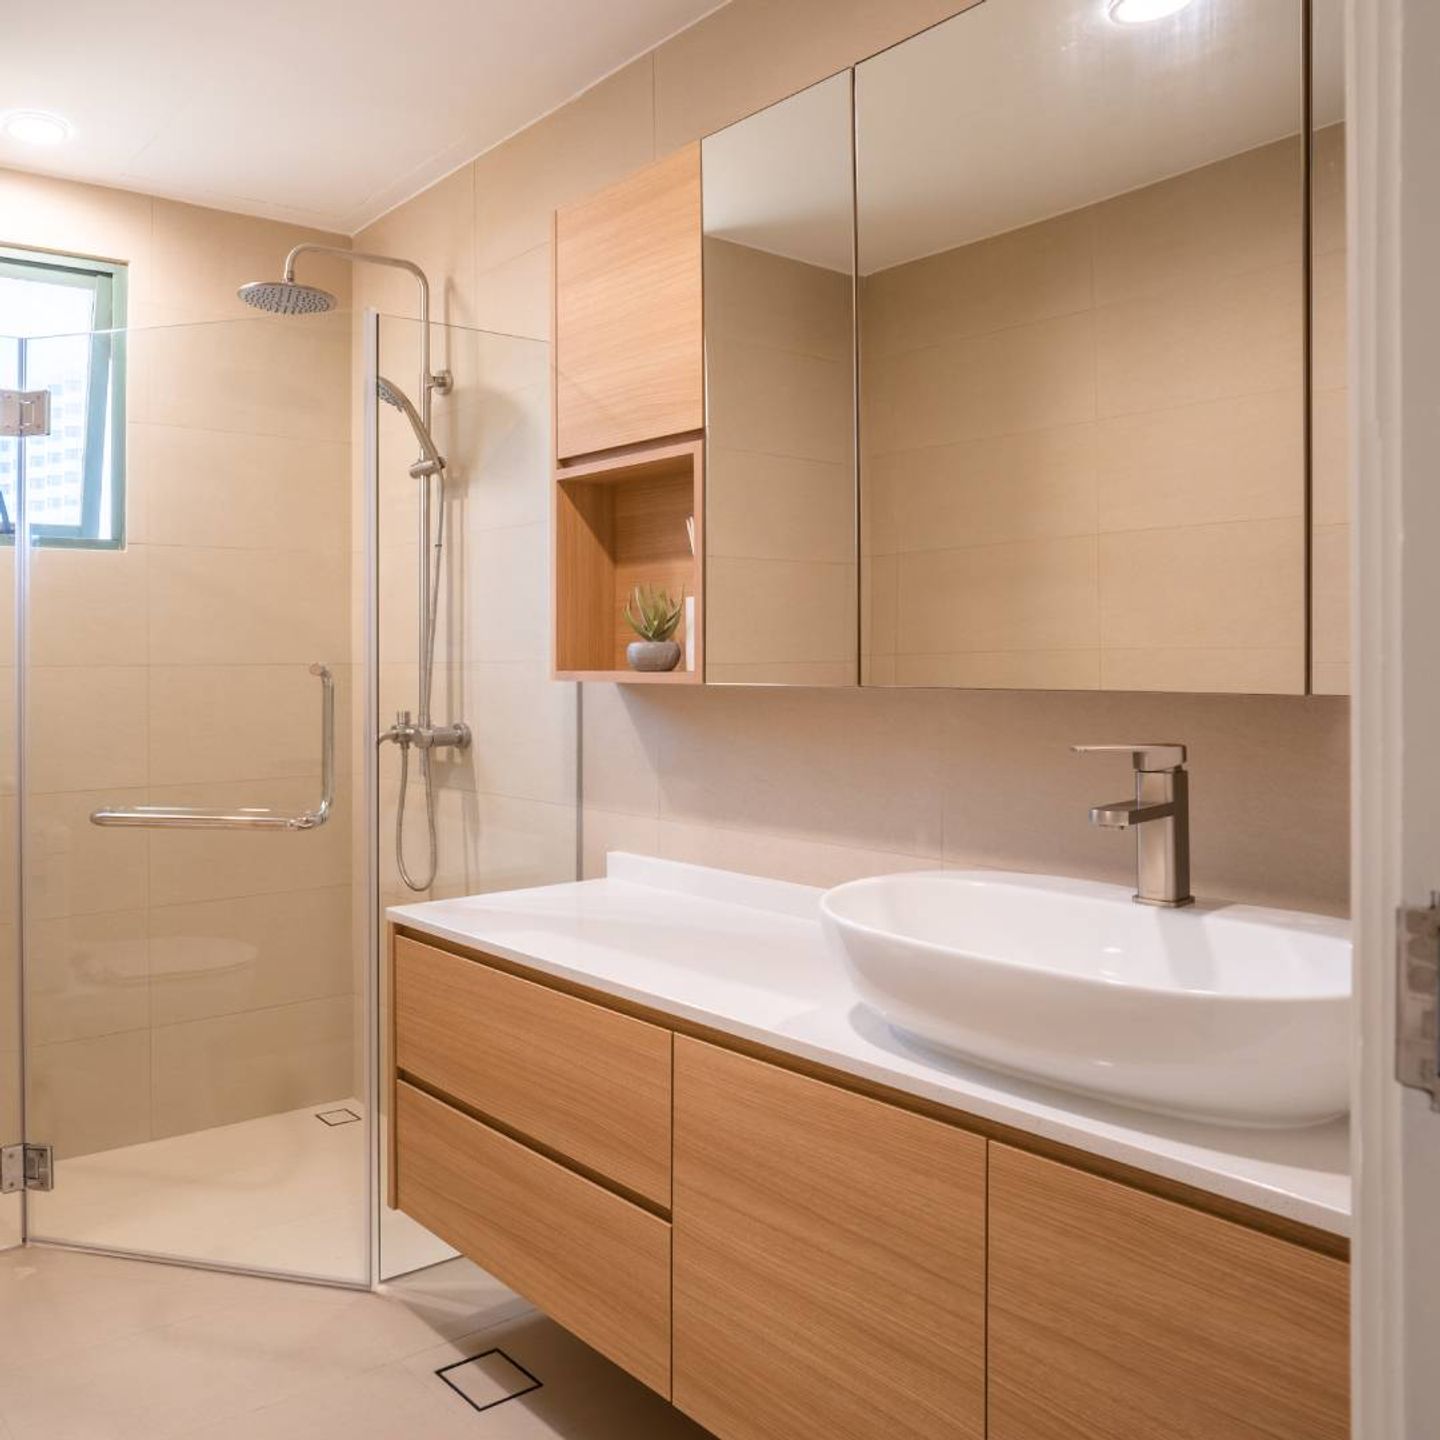 Brown And White Laminate Design For Bathroom Cabinets - Livspace